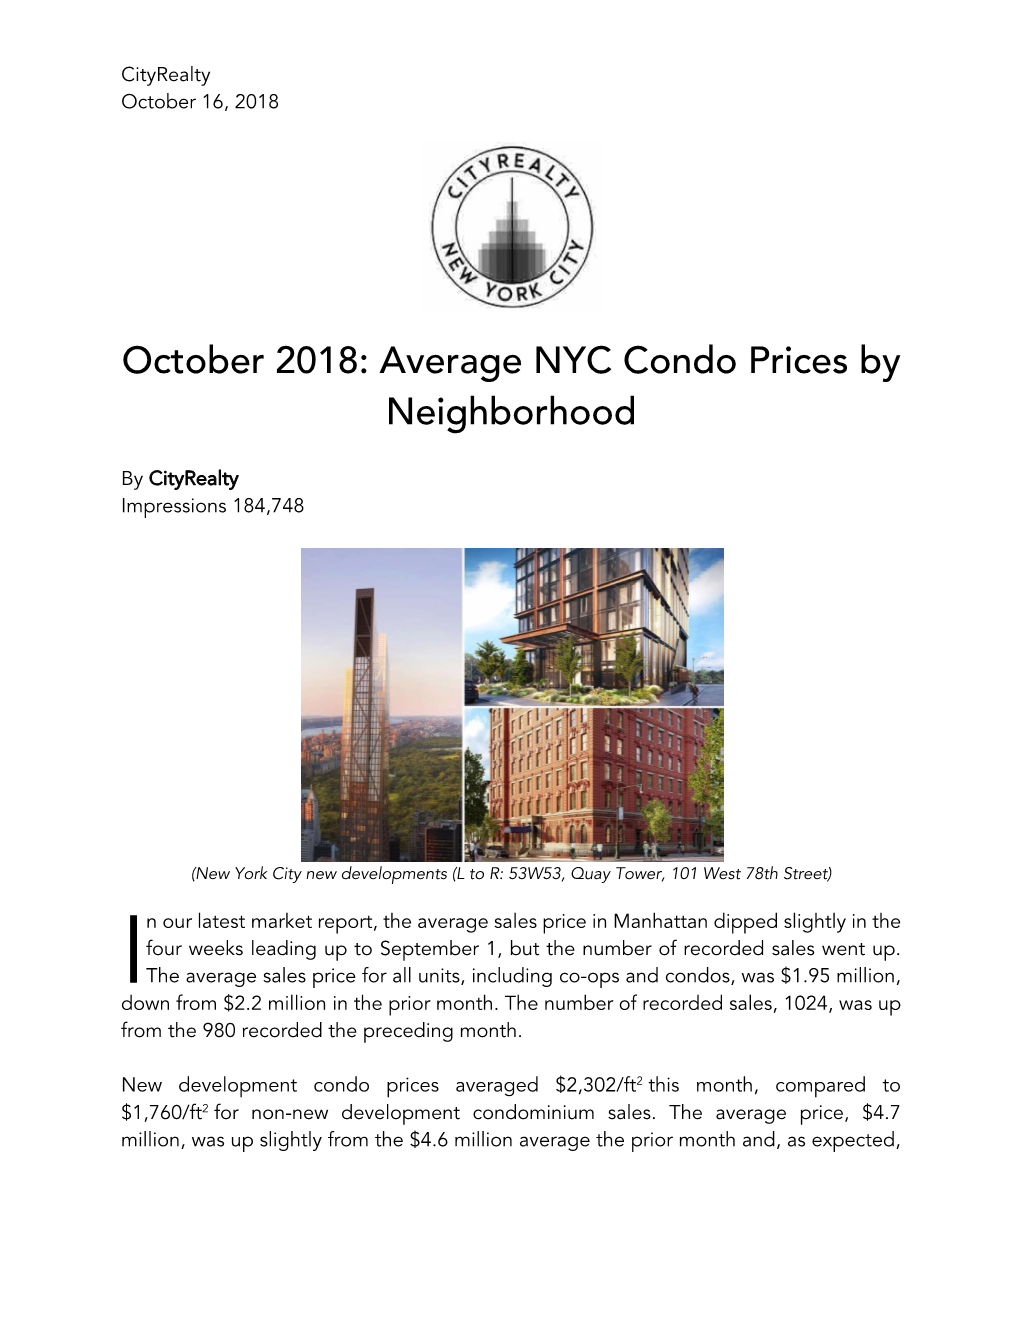 October 2018: Average NYC Condo Prices by Neighborhood